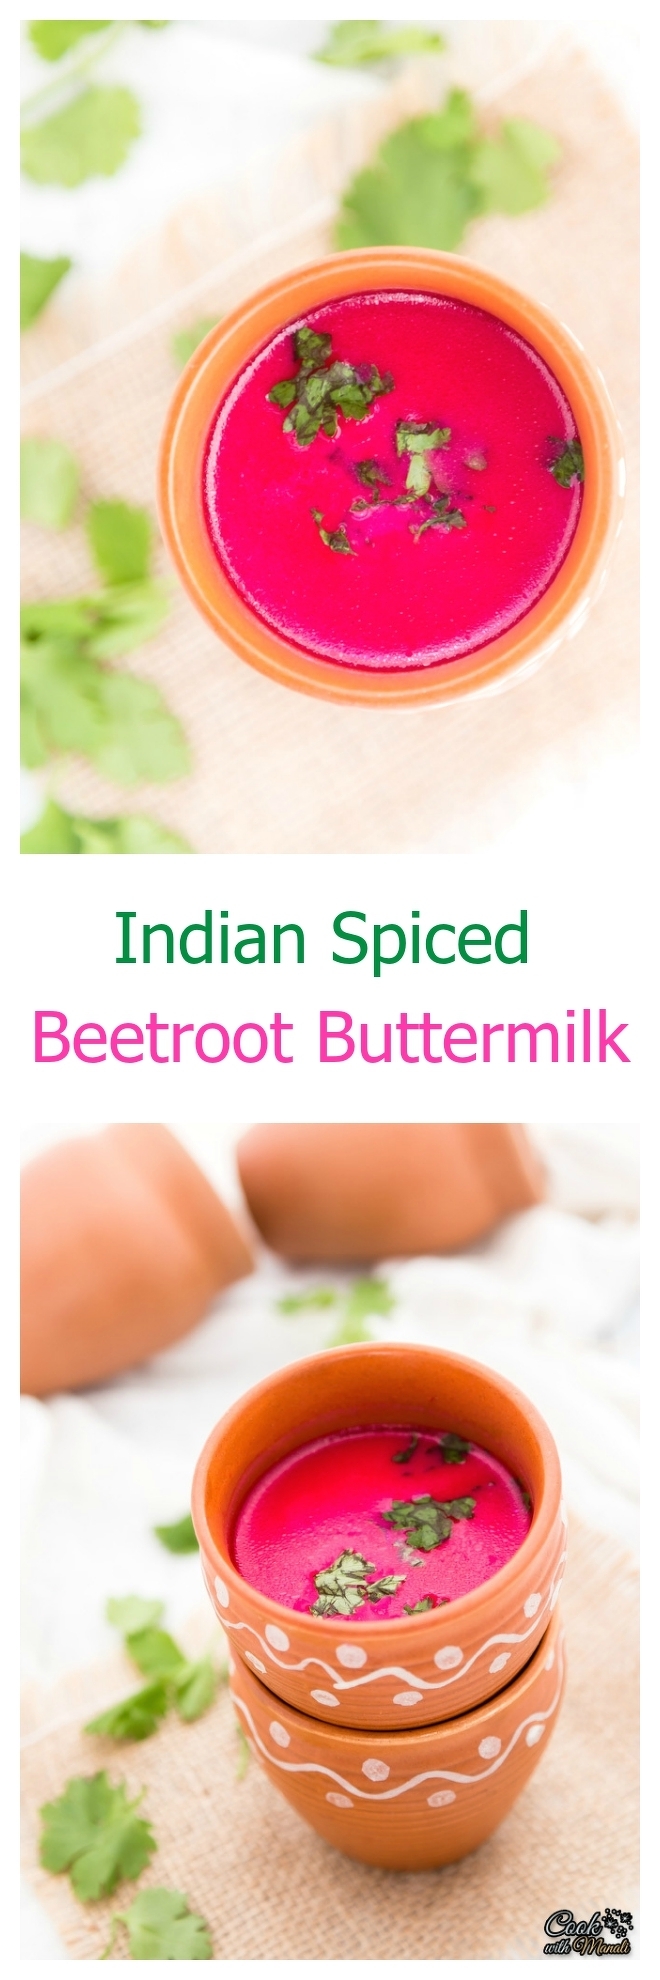 Spiced Beetroot Buttermilk Collage-nocwm